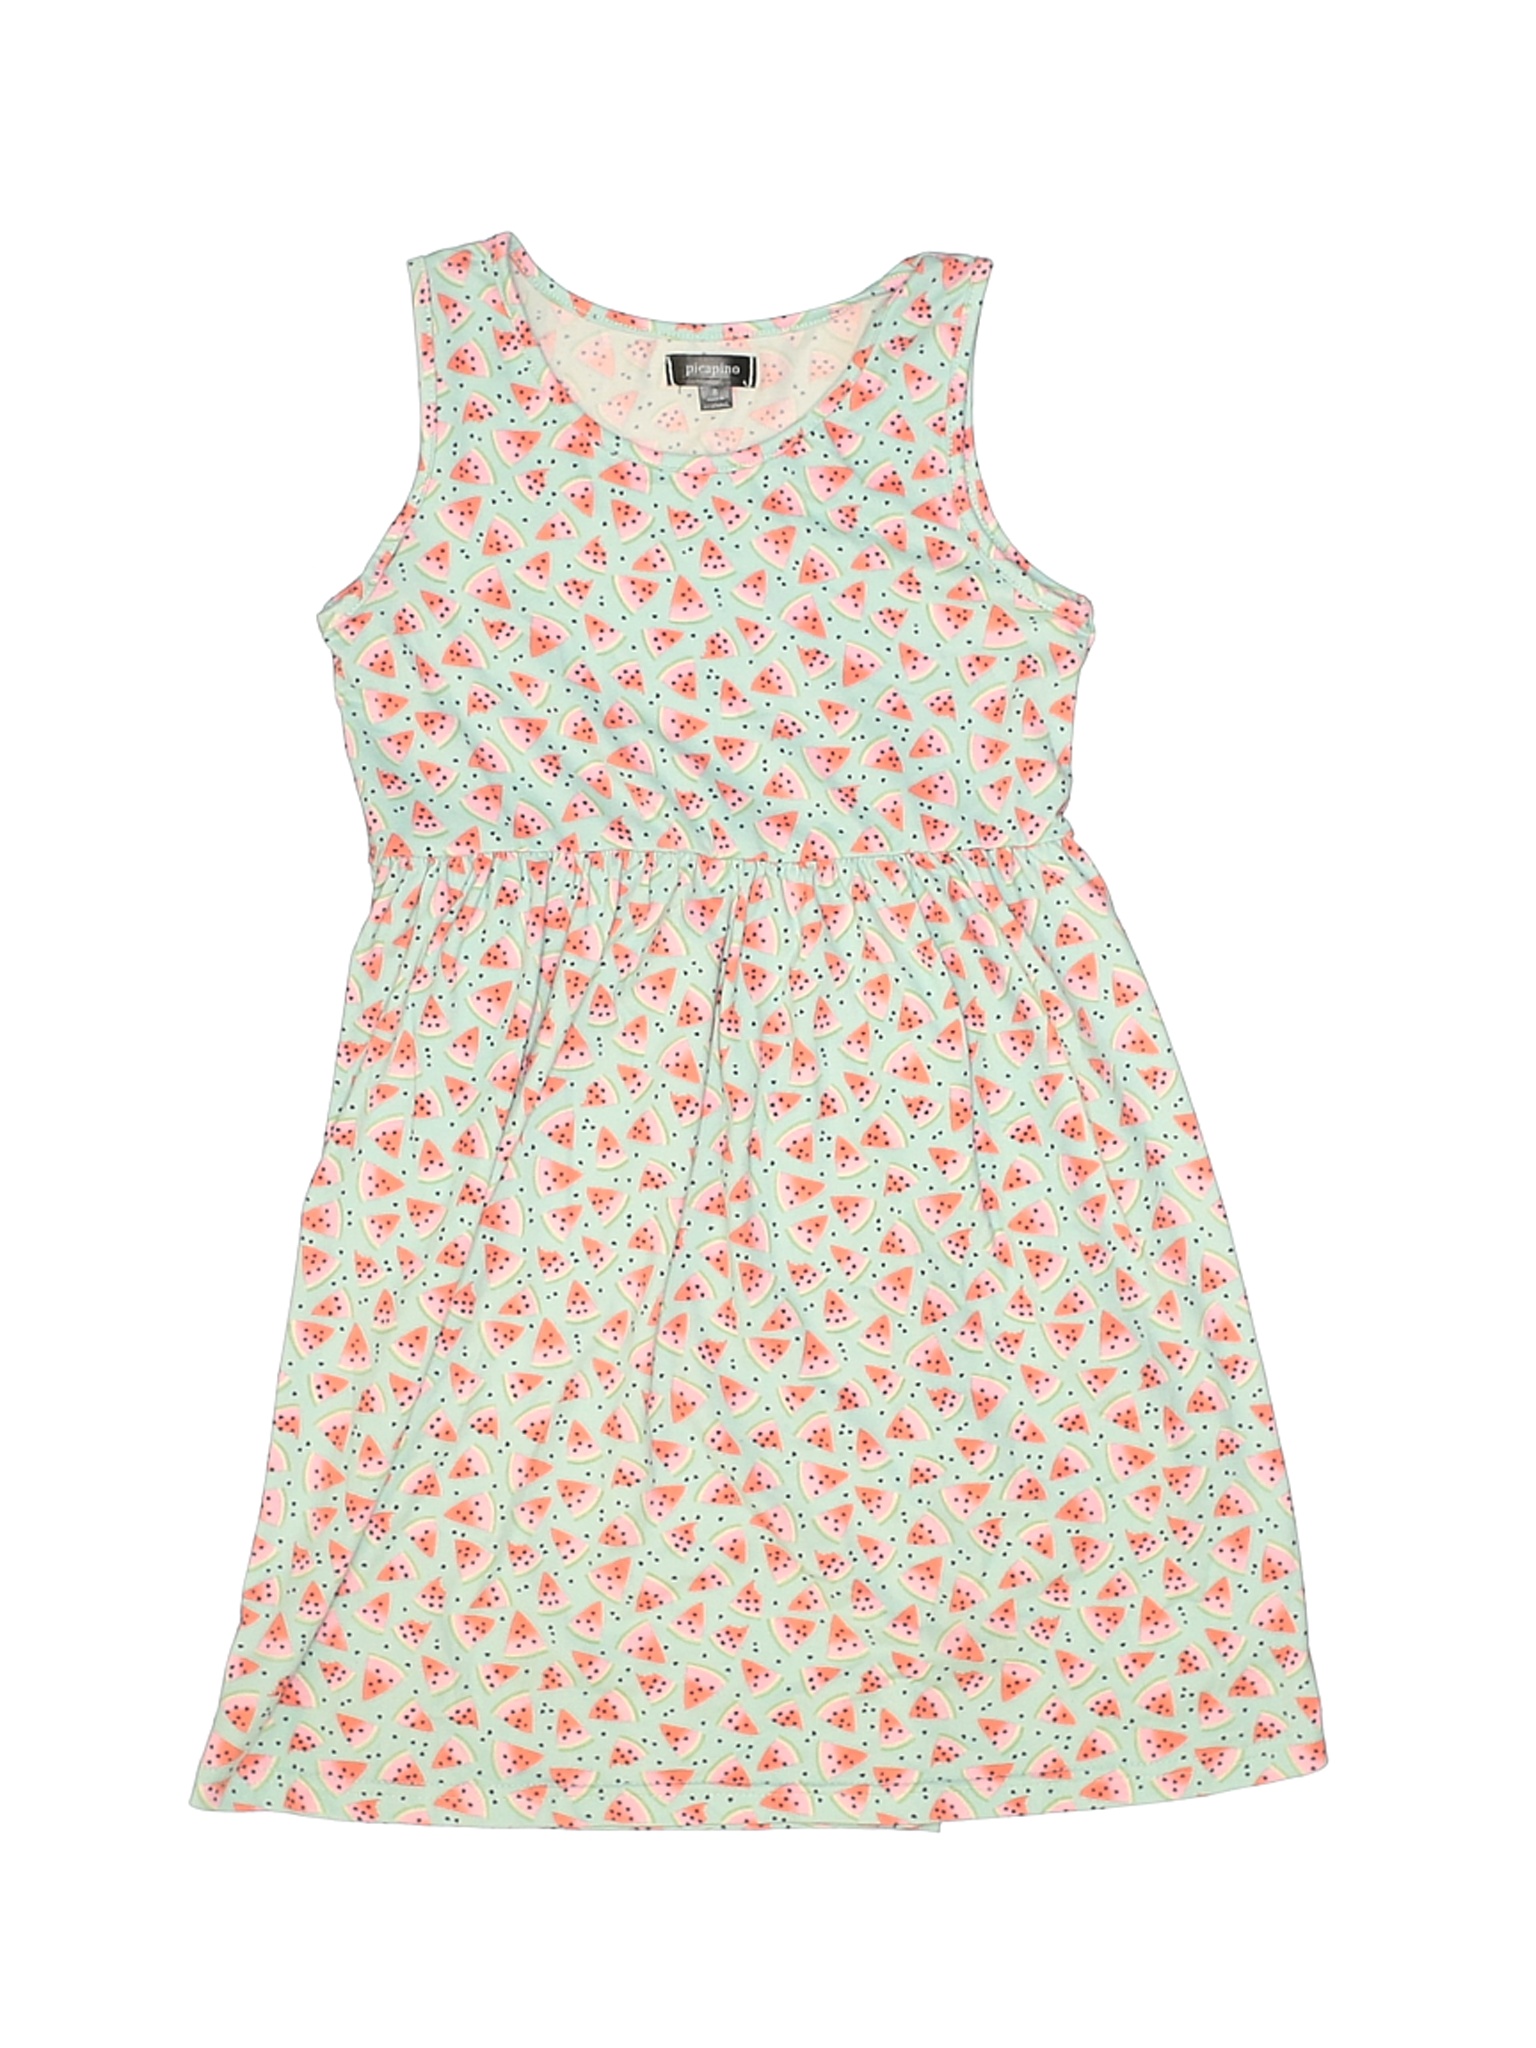 Picapino Girls Green Dress 8 | eBay